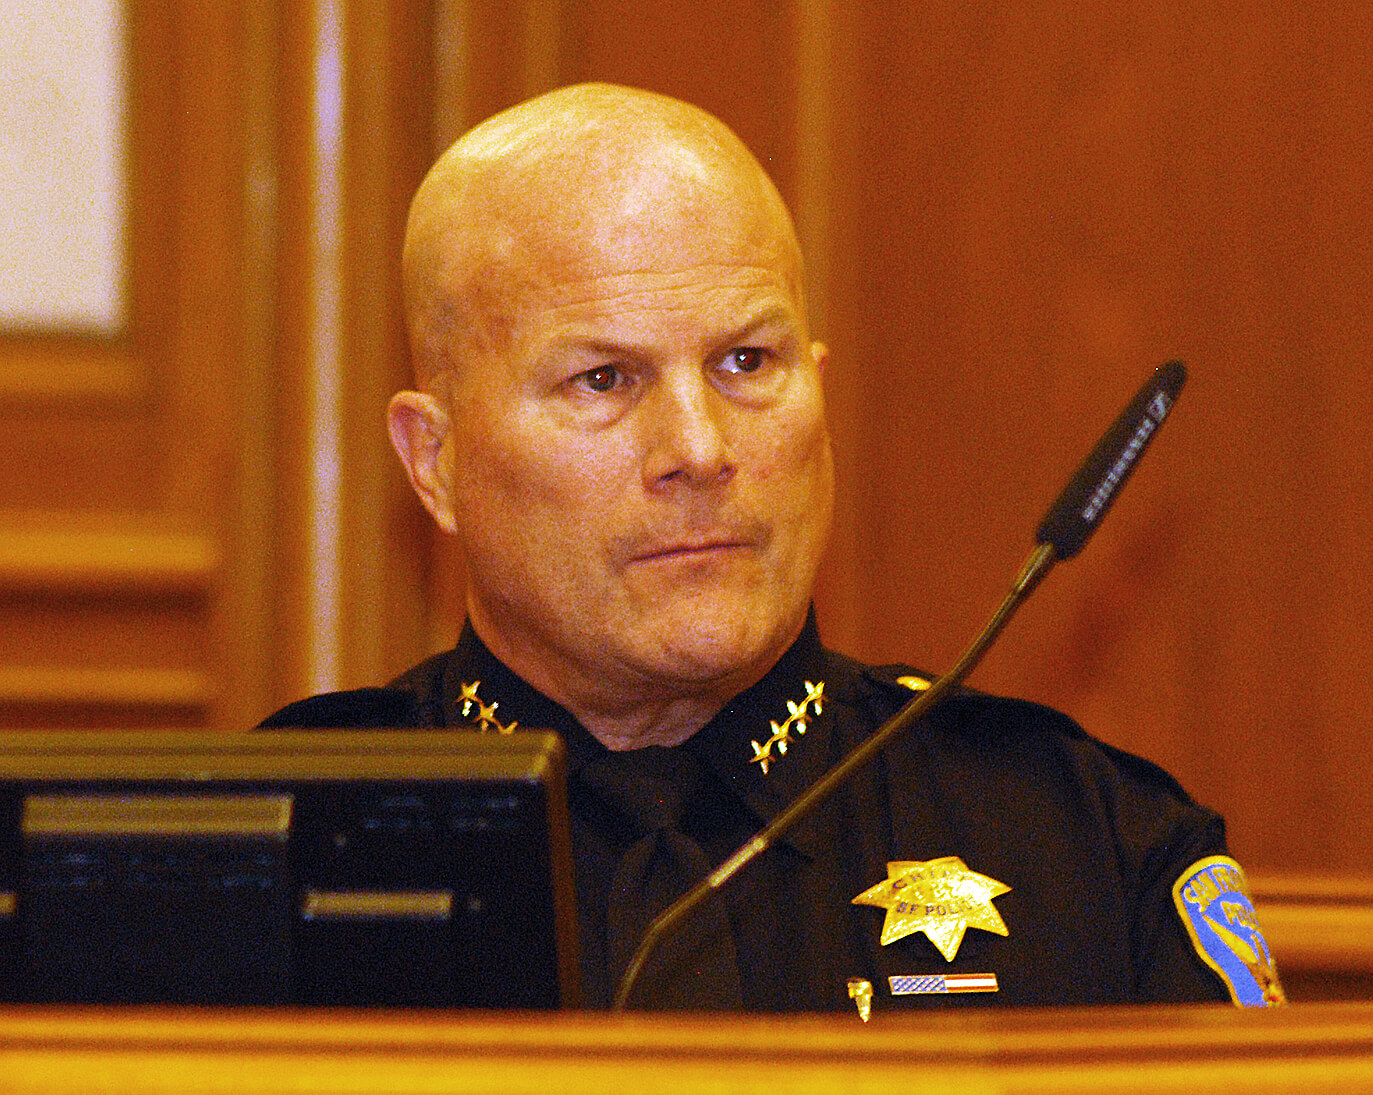 Police Chief Greg Suhr